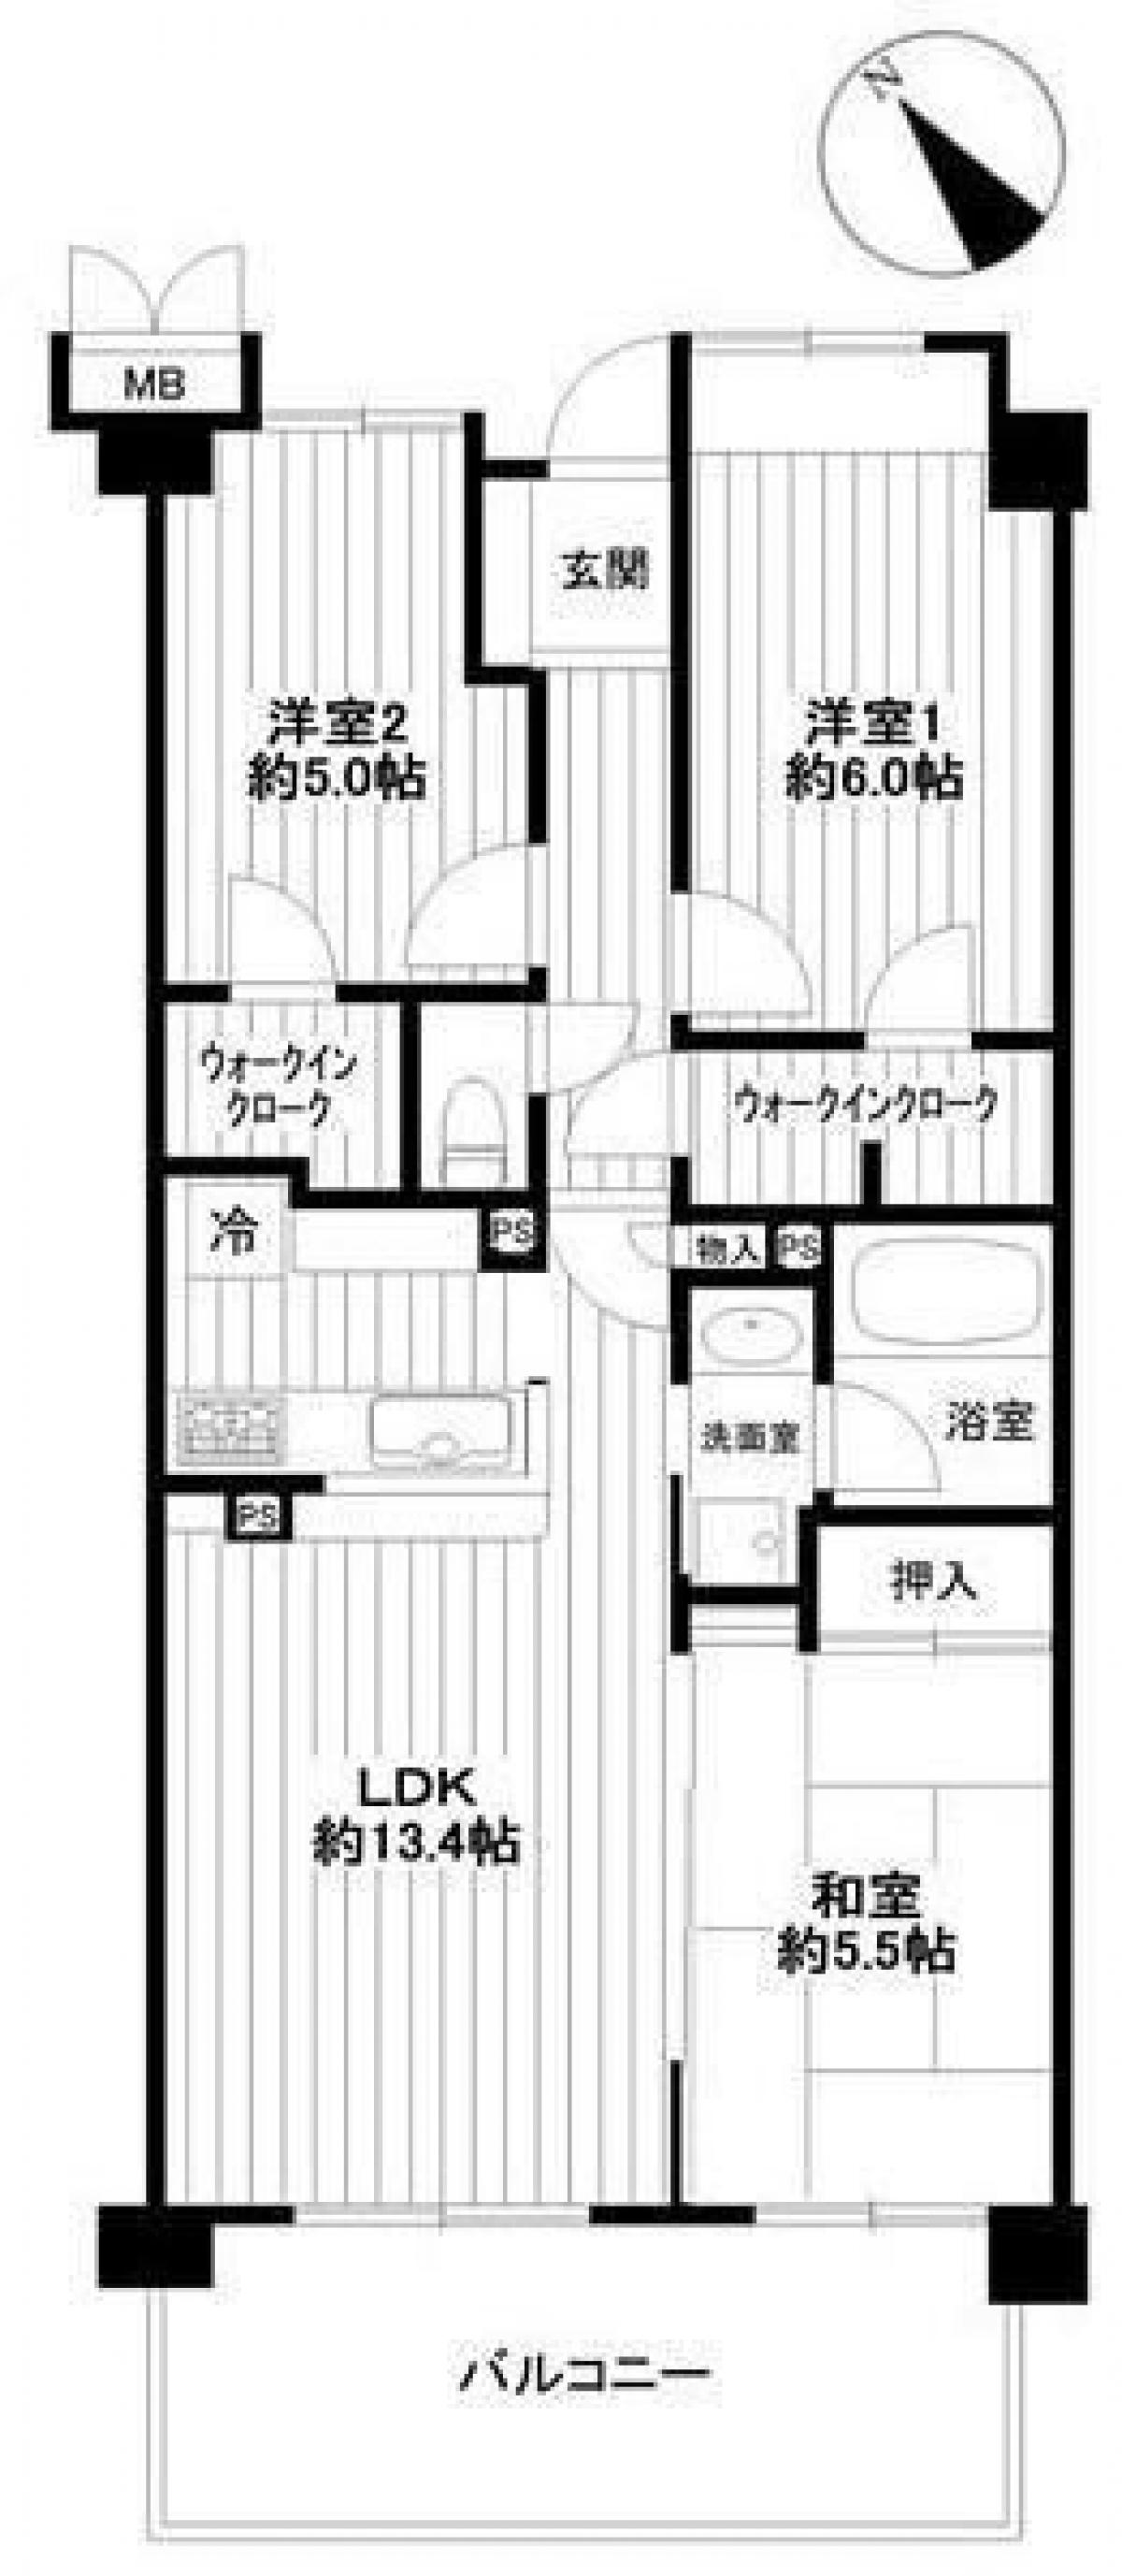 Picture of Apartment For Sale in Saitama Shi Iwatsuki Ku, Saitama, Japan